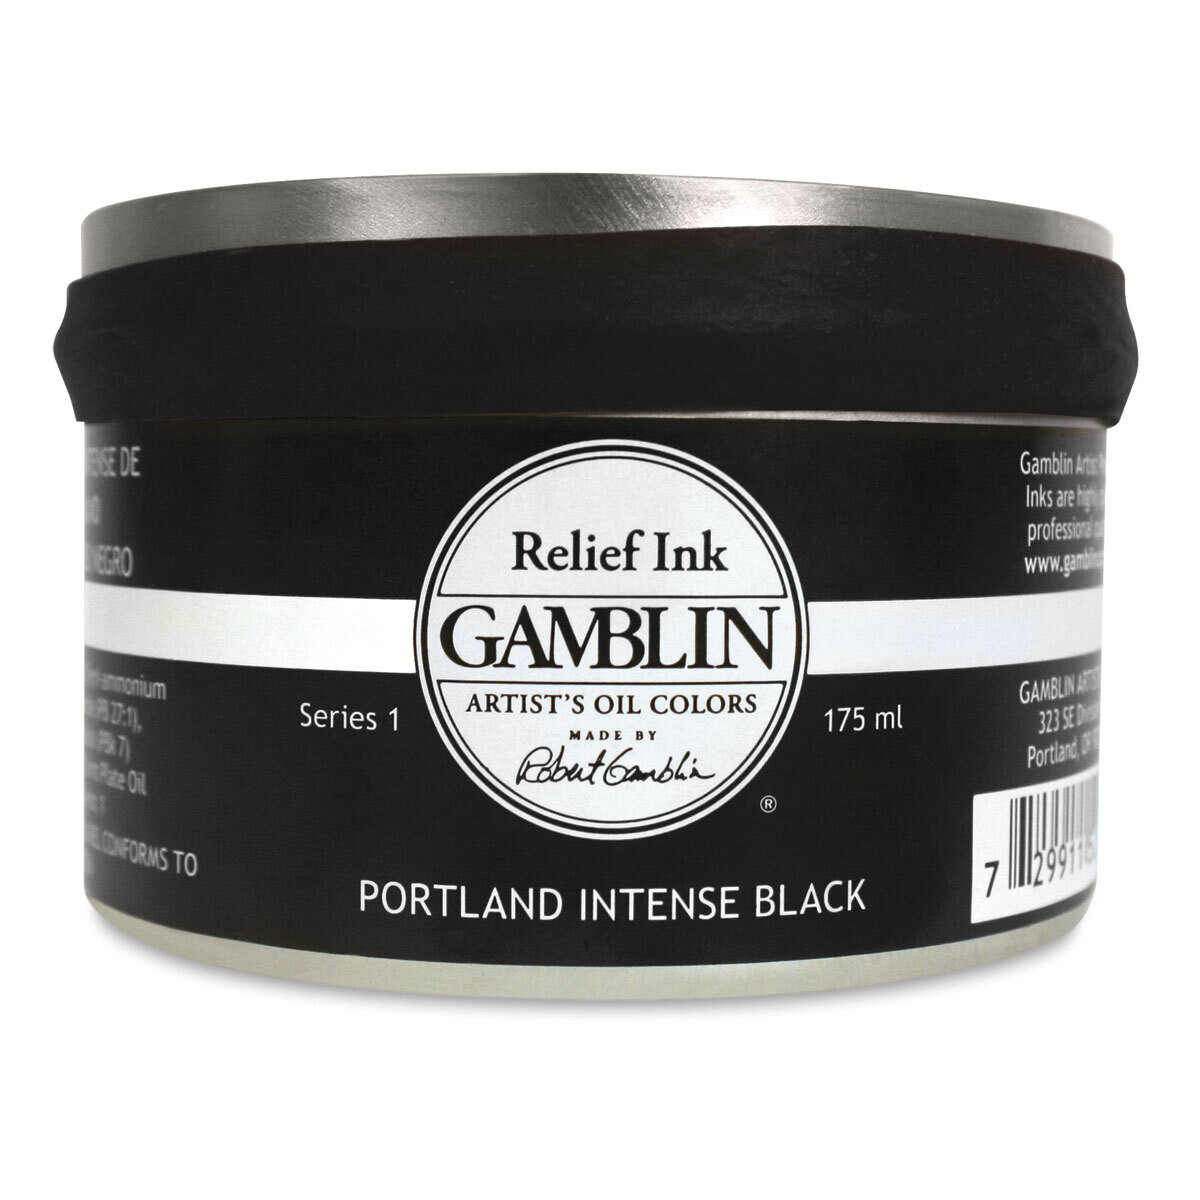 Gamblin Relief Ink Portland Intense Black